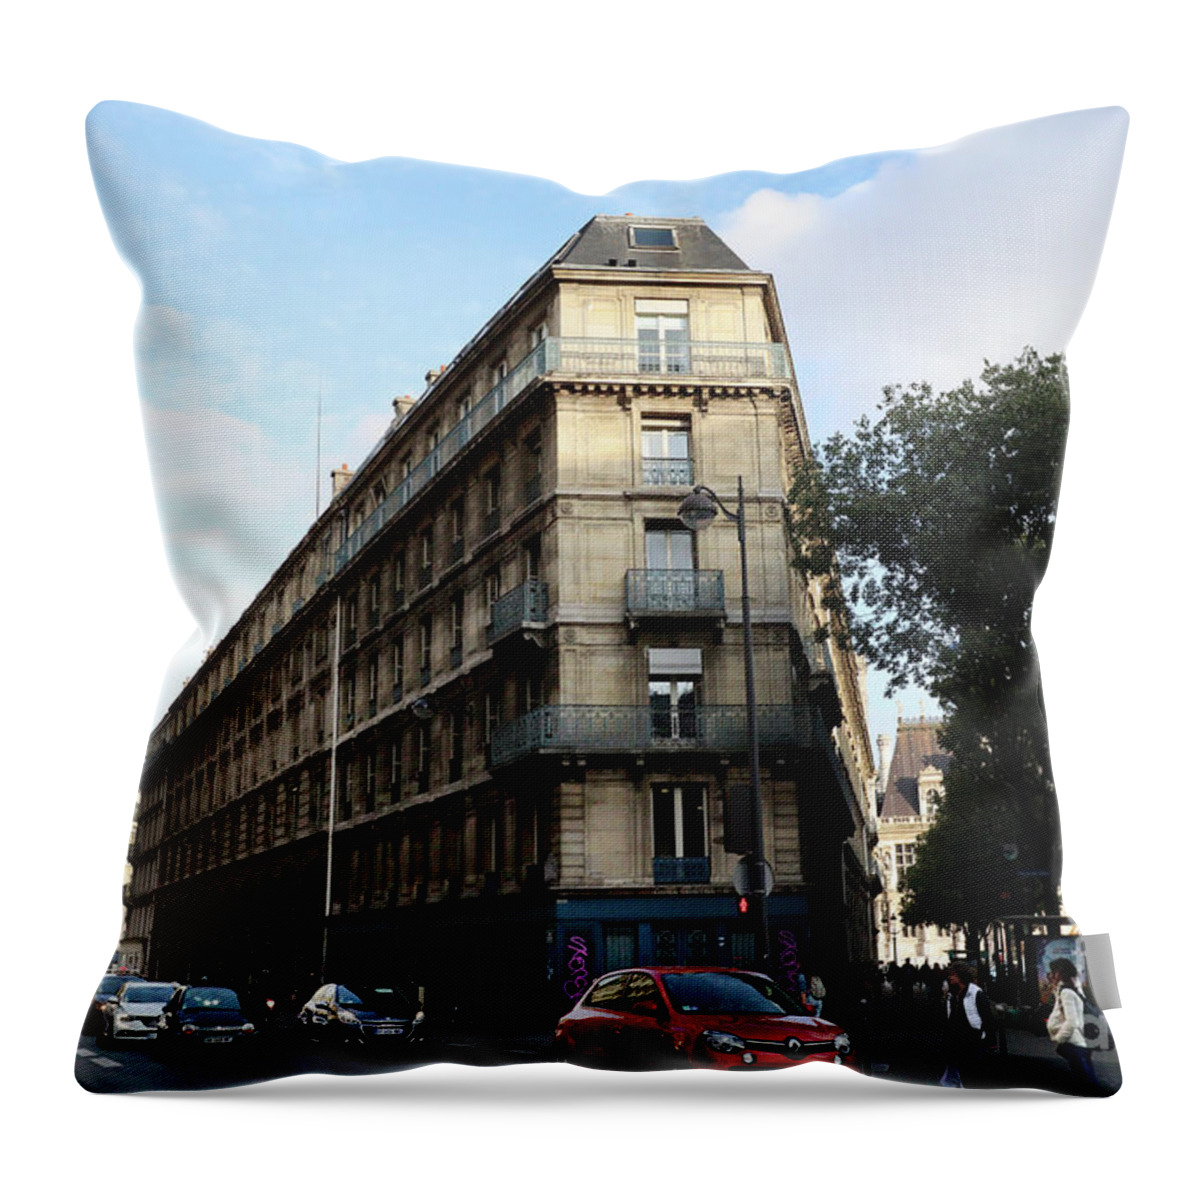 Paris Throw Pillow featuring the photograph Paris ,France #78 by Steven Spak